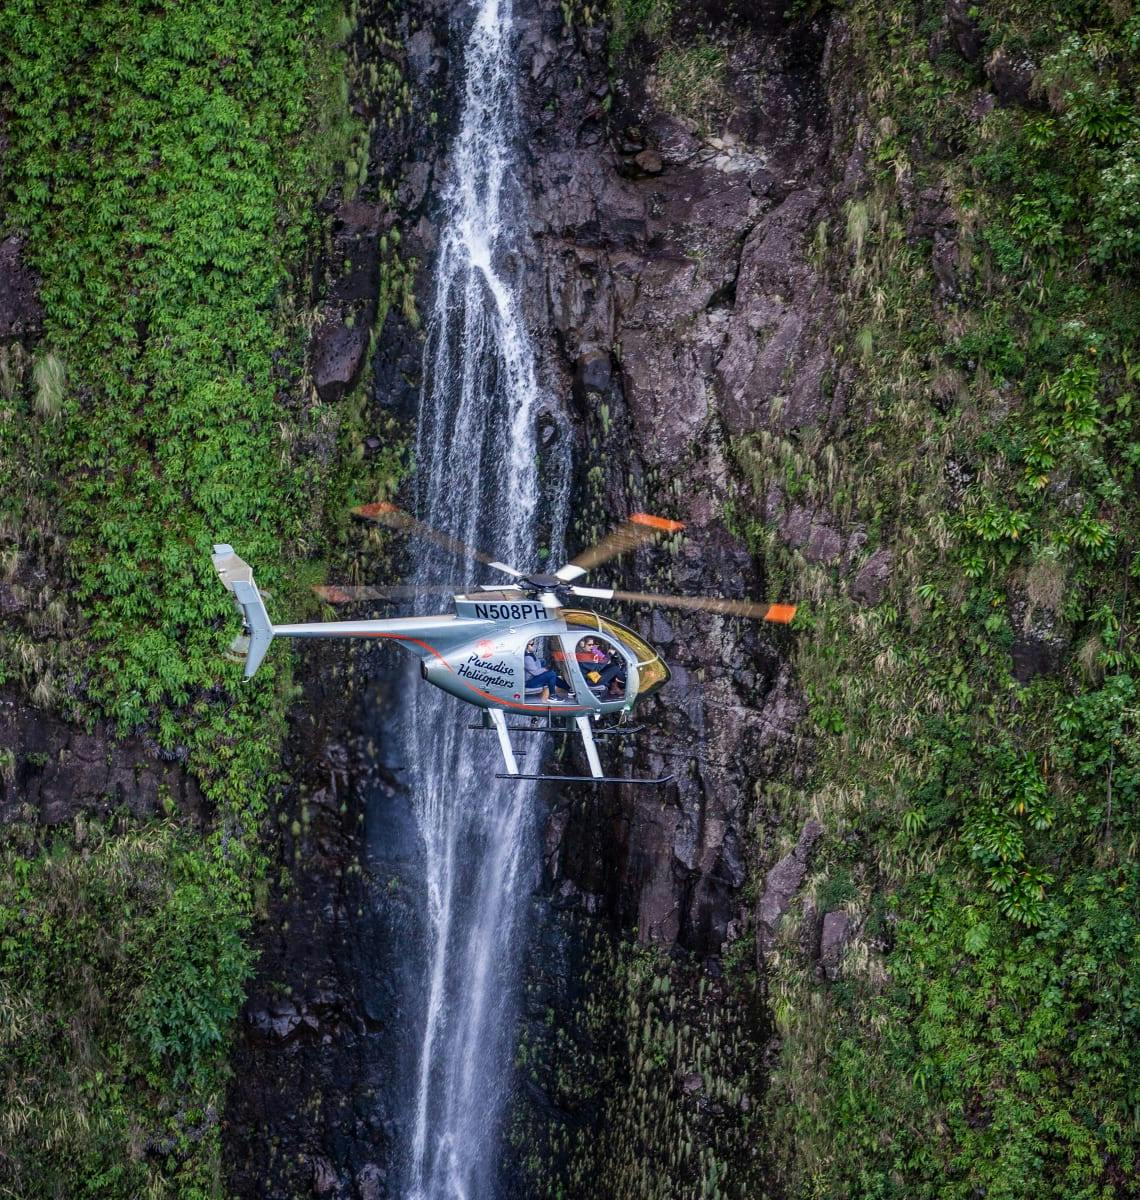 MD 500 flying along Hilo waterfall